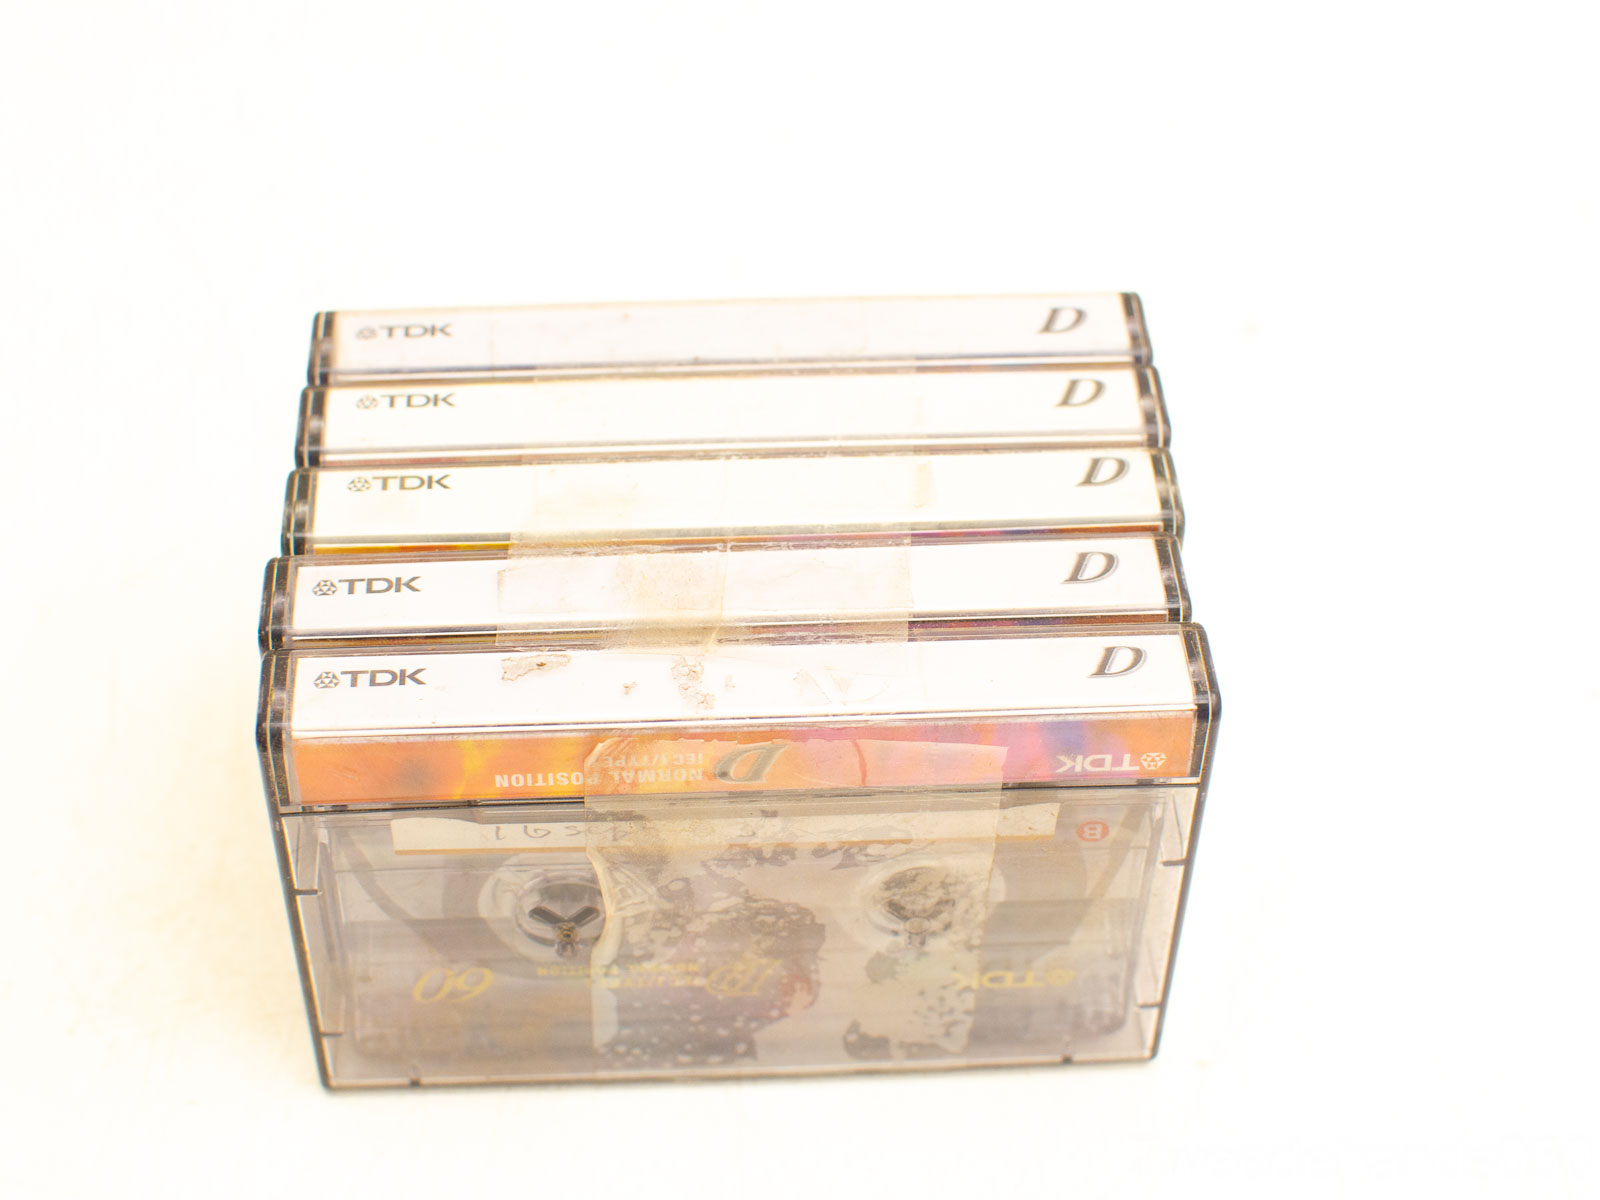 5 Tdk cassettebandjes  31394